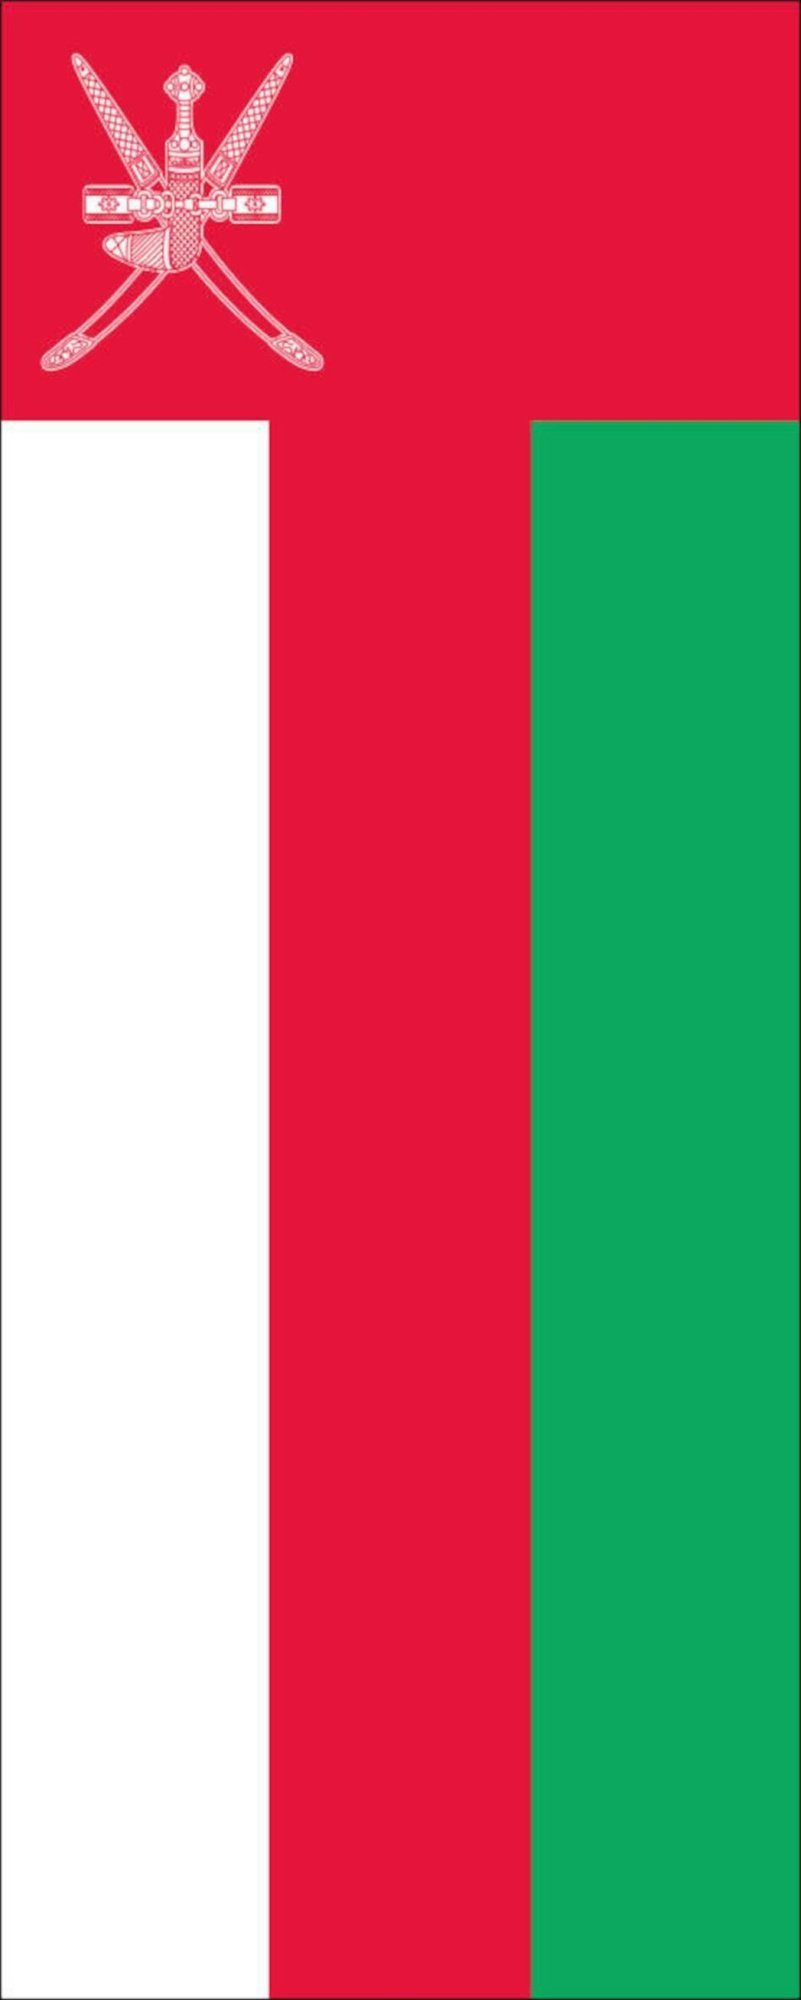 Hochformat Oman g/m² 110 flaggenmeer Flagge Flagge